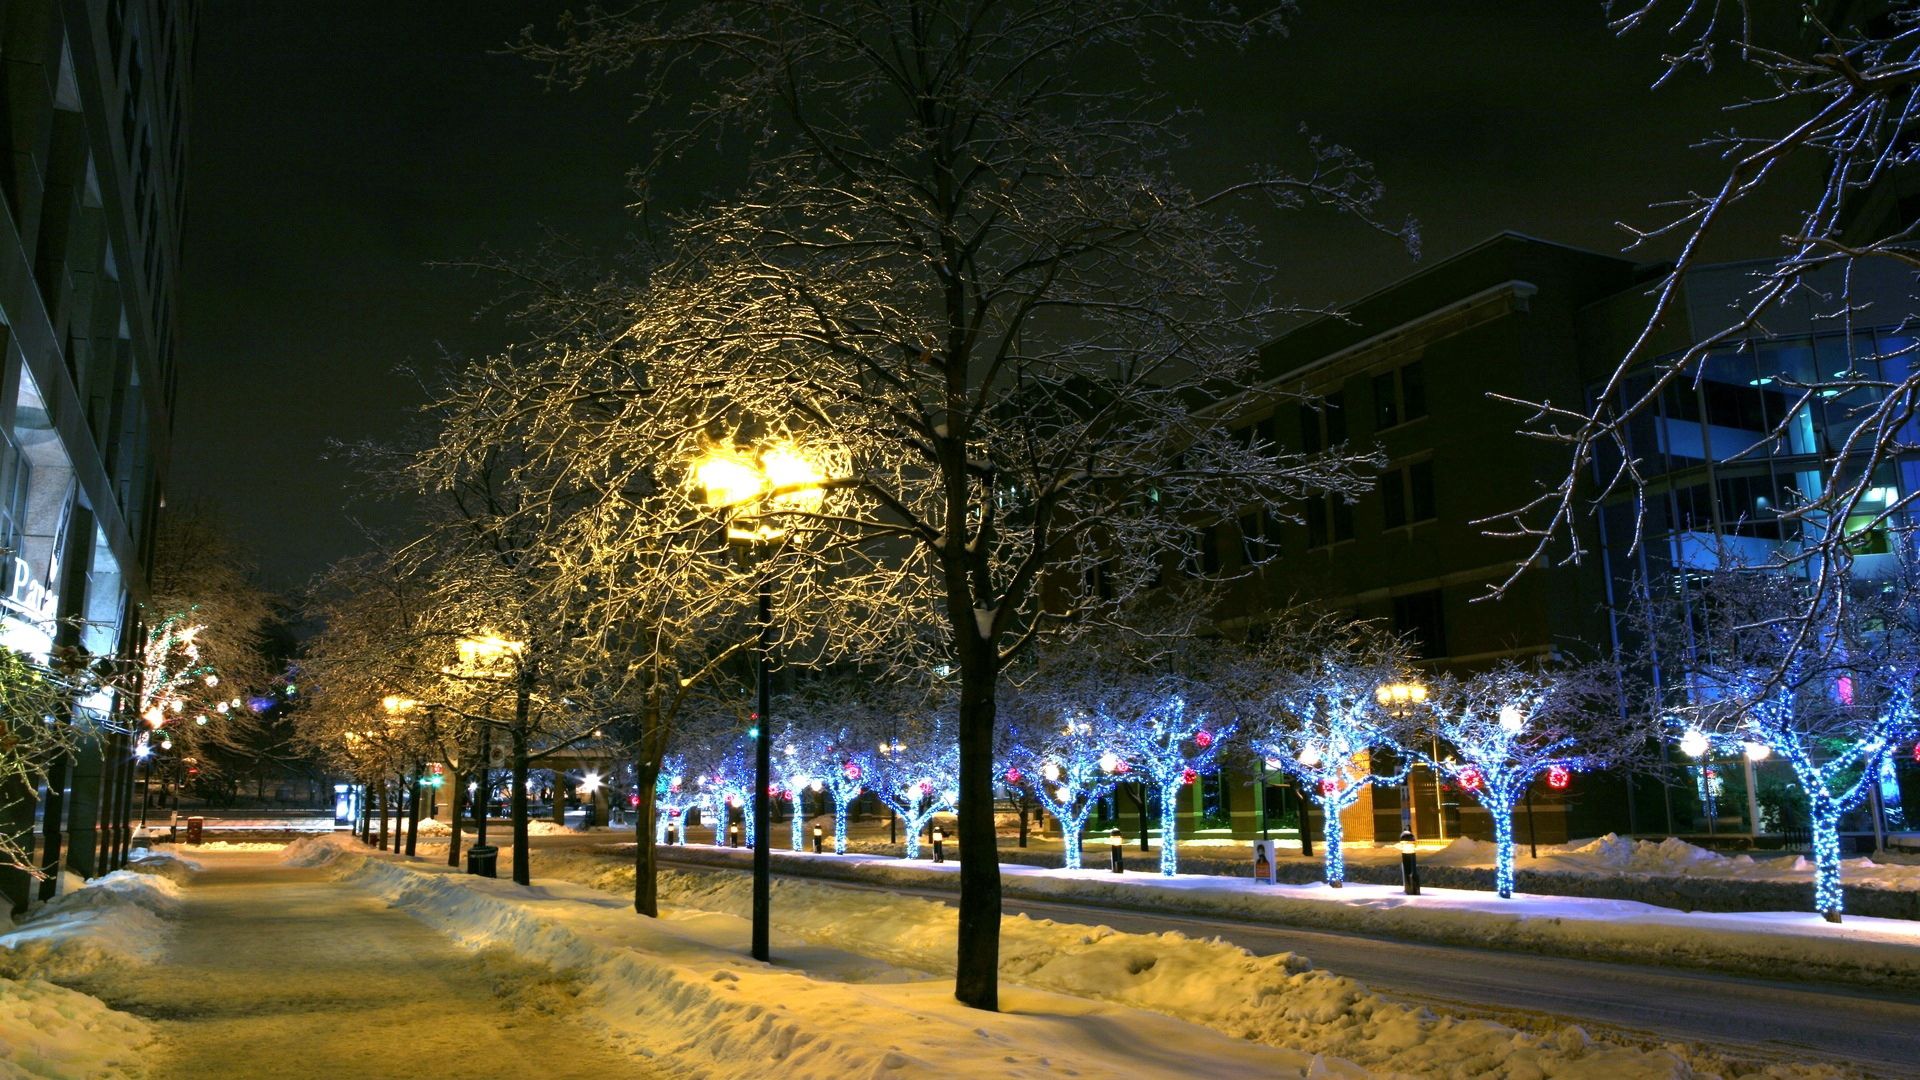 cities, winter, trees, night, city, park, decor, decoration, street